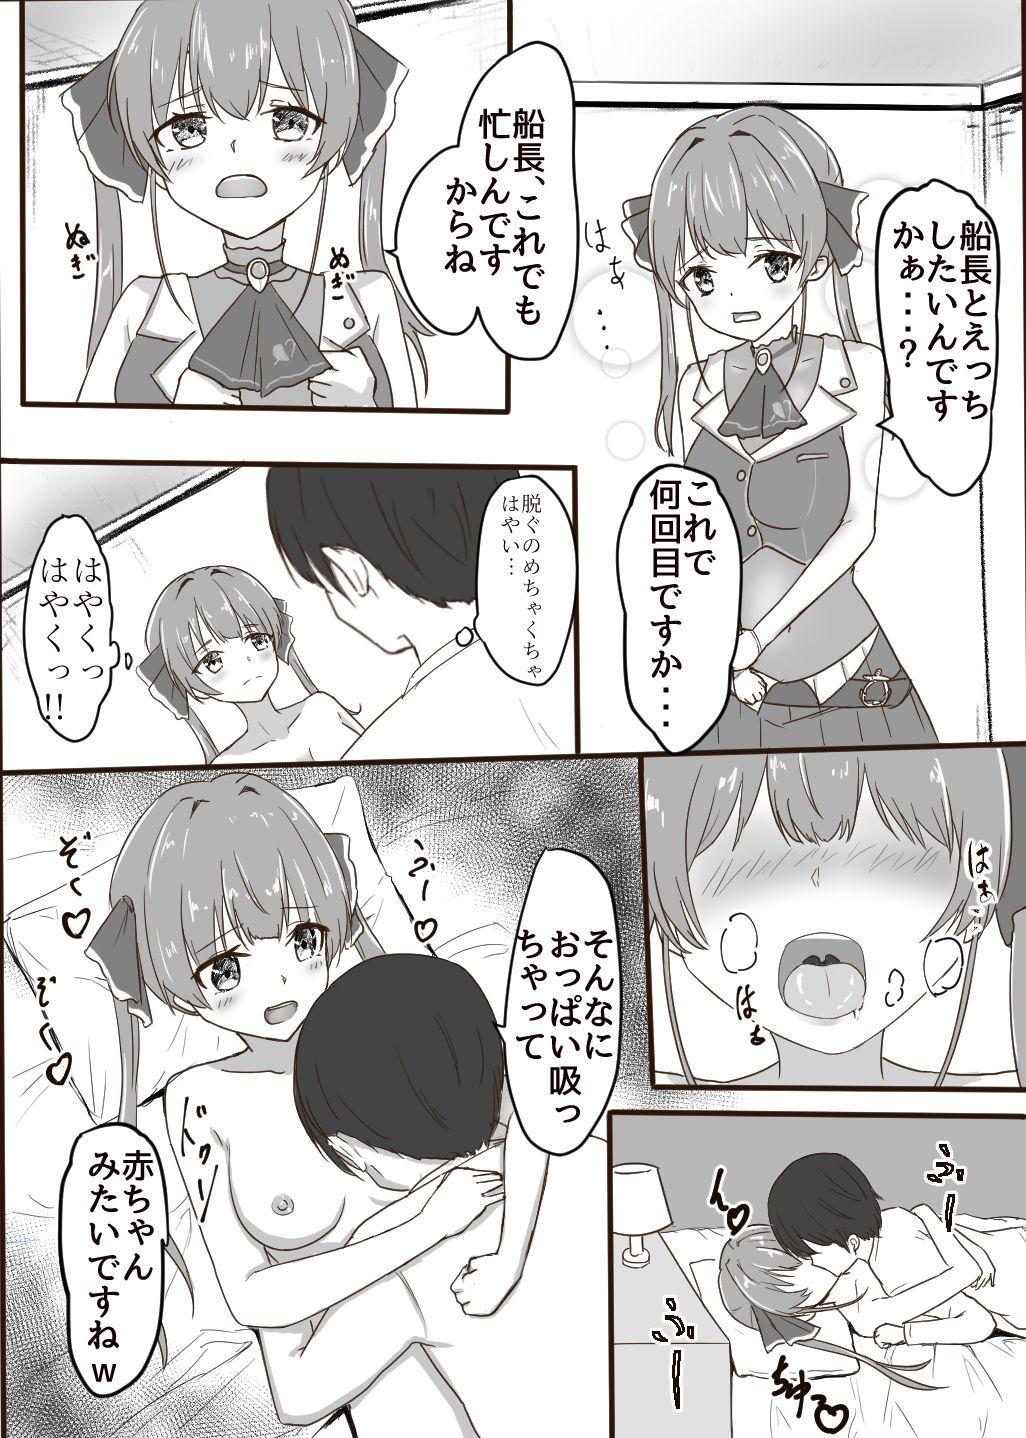 Houshou Marine R18 Manga 1